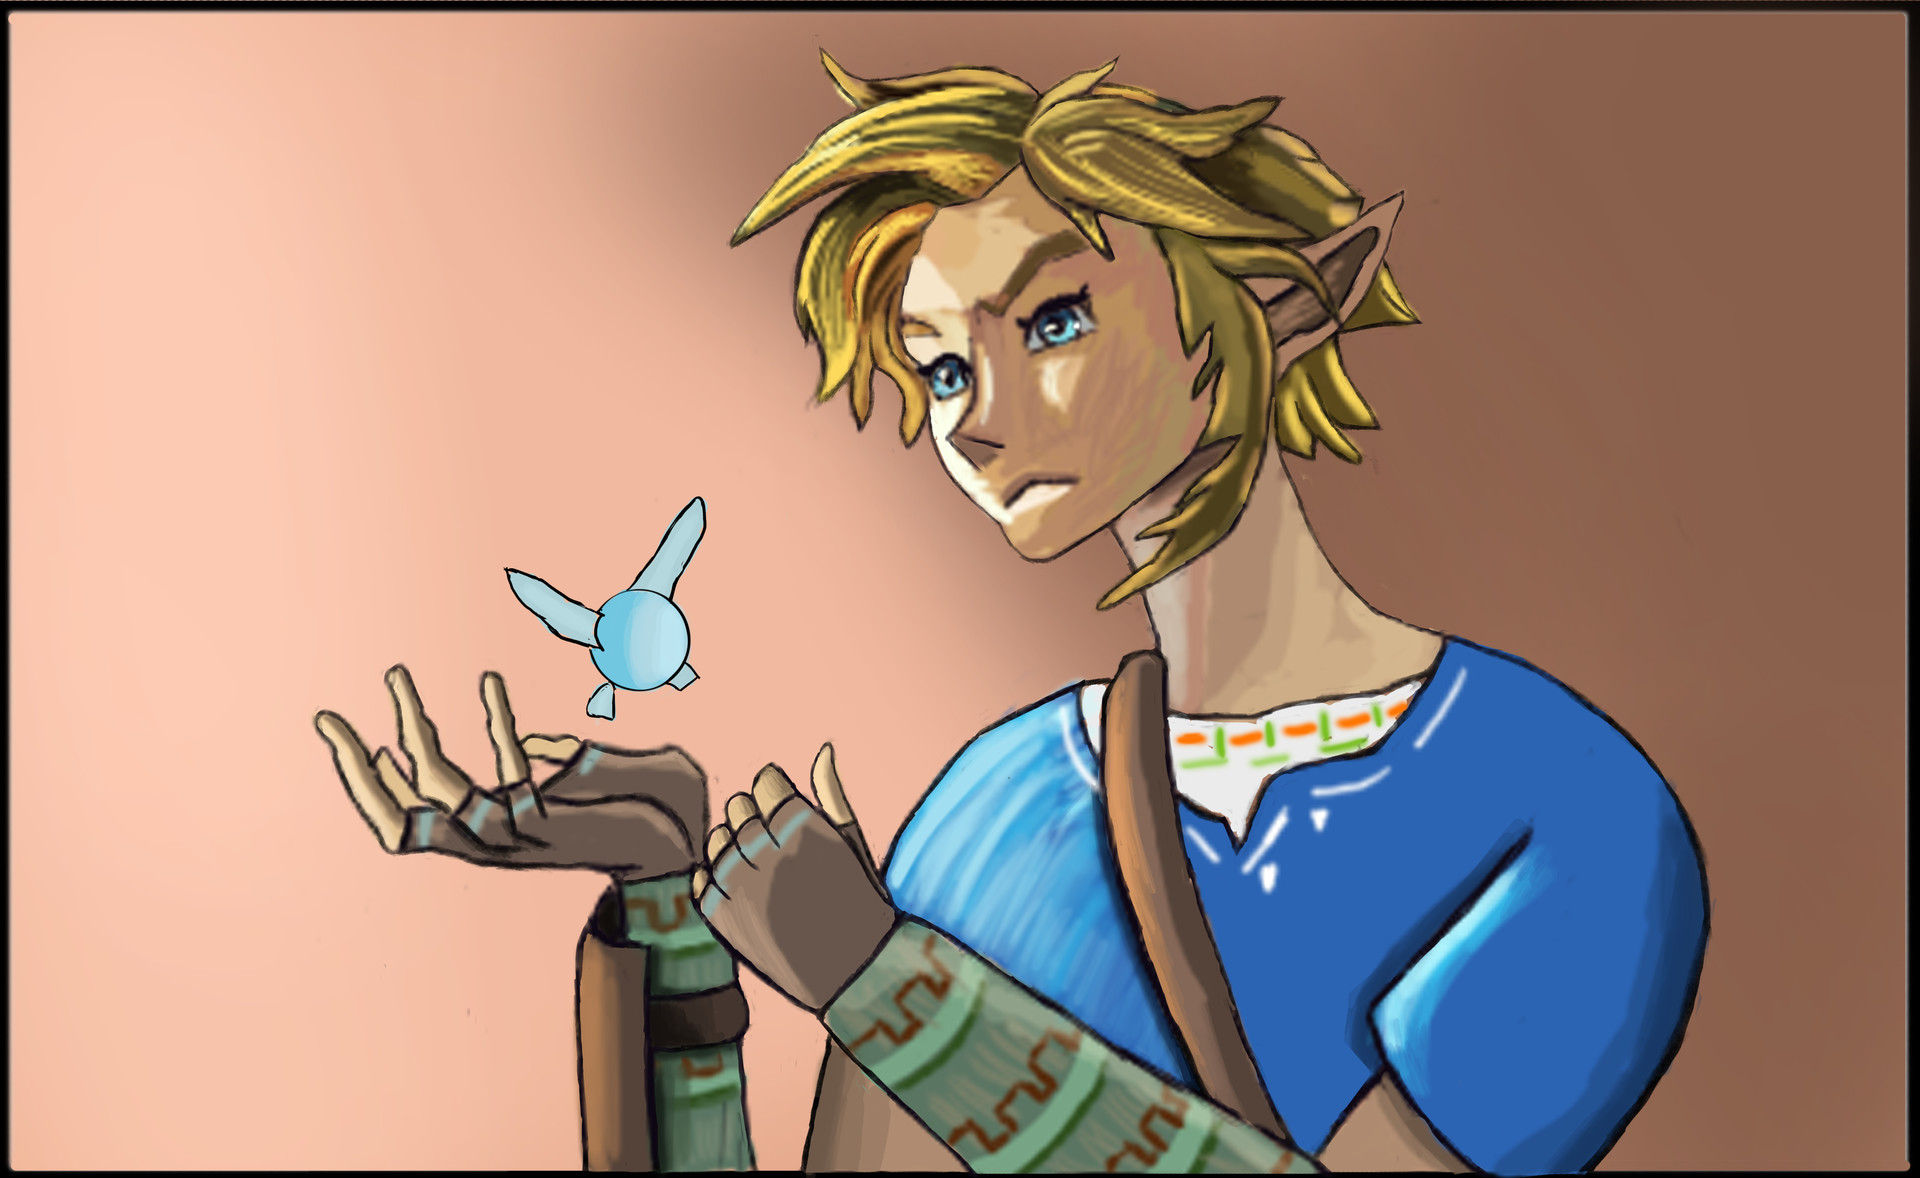 OC] Here is a little fanart of Link from the Legend of Zelda